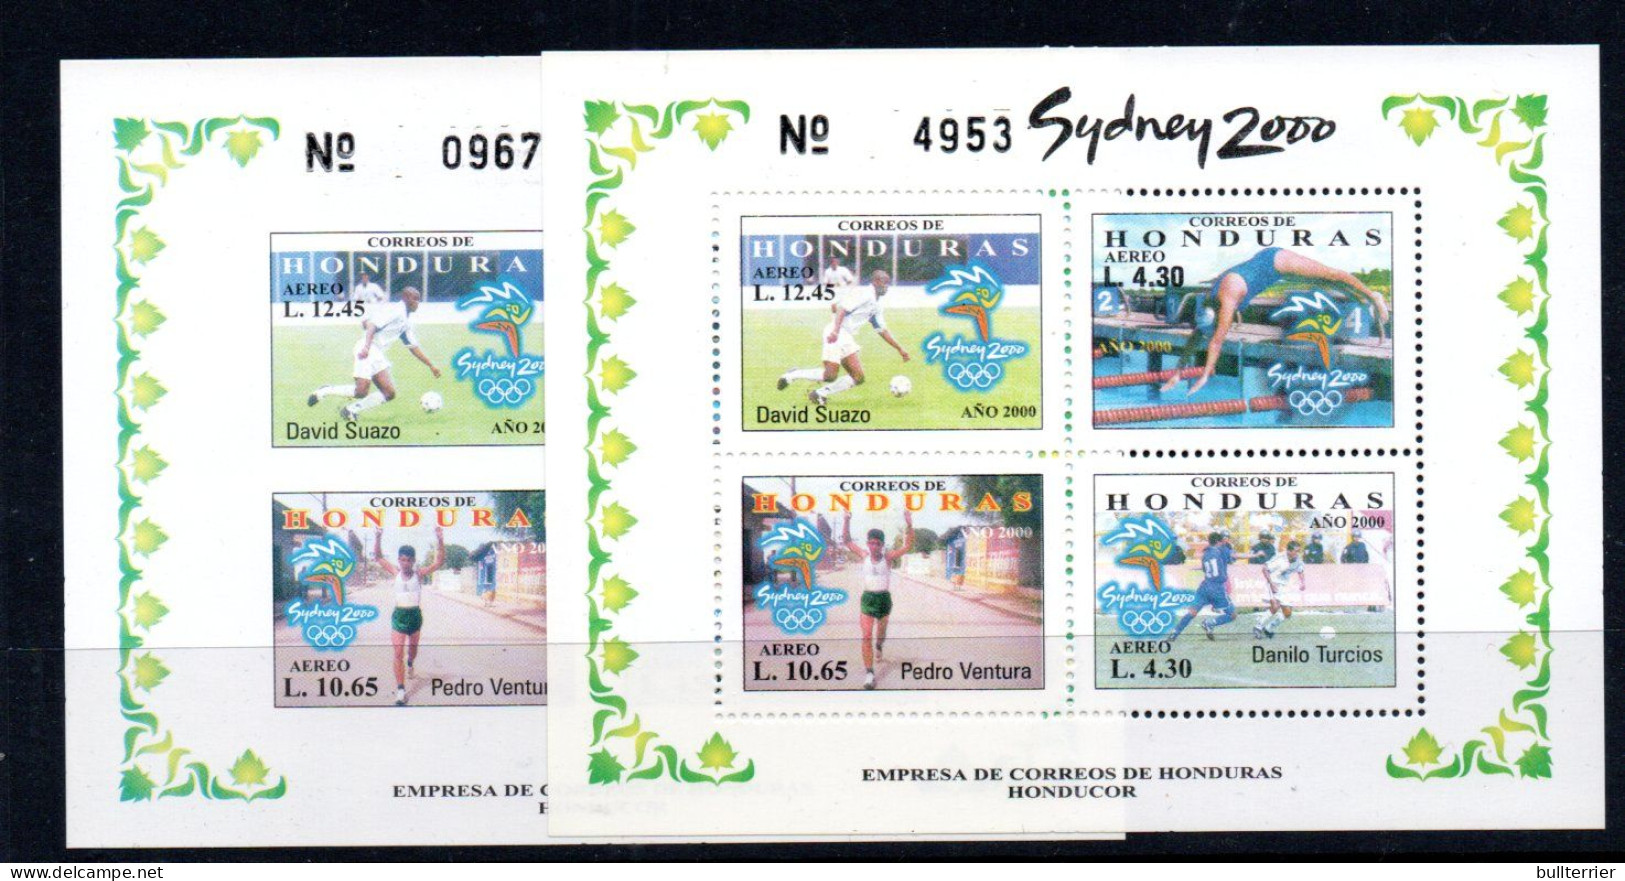 OLYMPICS - Honduras - 2000 - Sydney Olympics S/sheets Perf & Imperf MNH, - Sommer 2000: Sydney